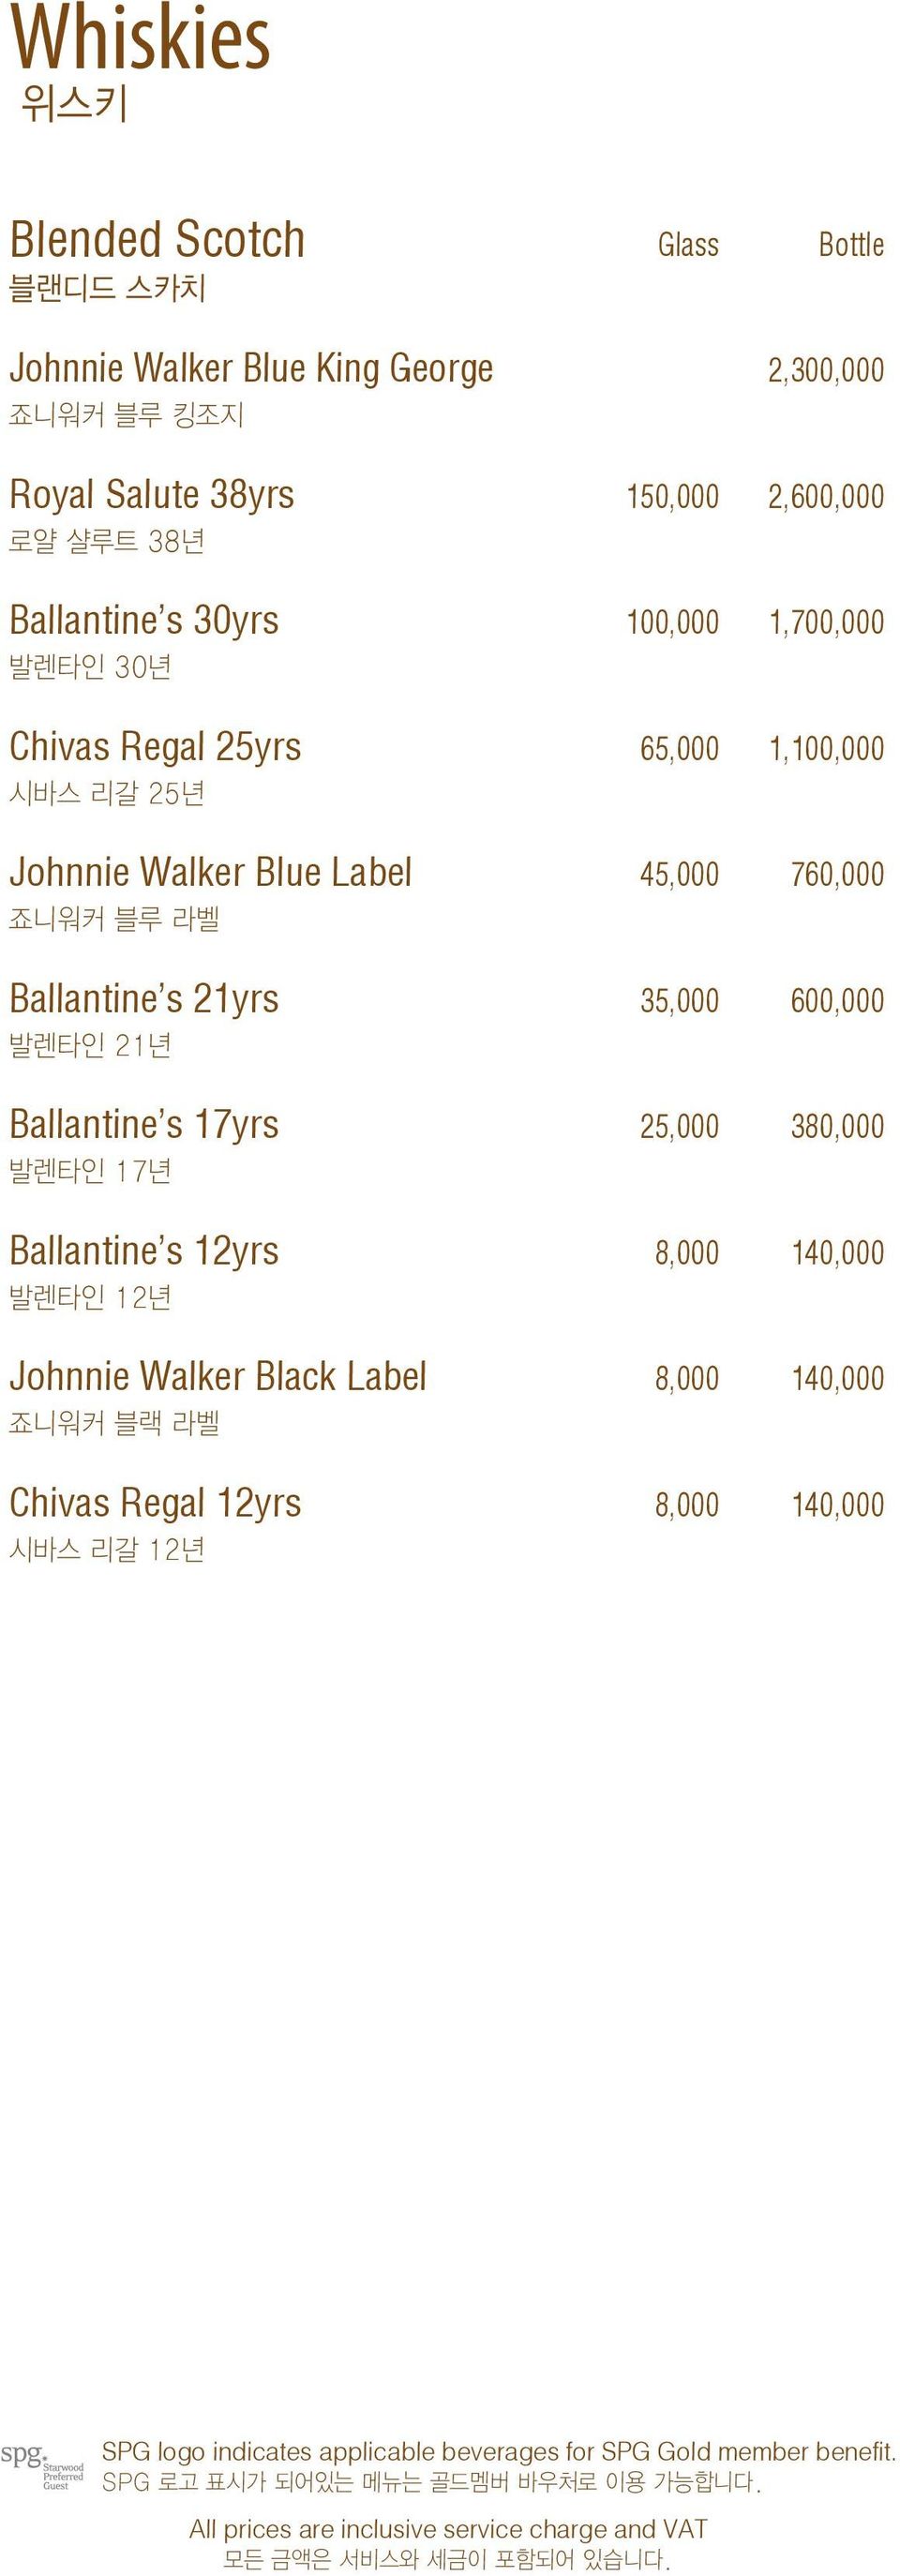 Walker Blue Label 45,000 760,000 죠니워커 블루 라벨 Ballantine s 21yrs 35,000 600,000 발렌타인 21년 Ballantine s 17yrs 25,000 380,000 발렌타인 17년